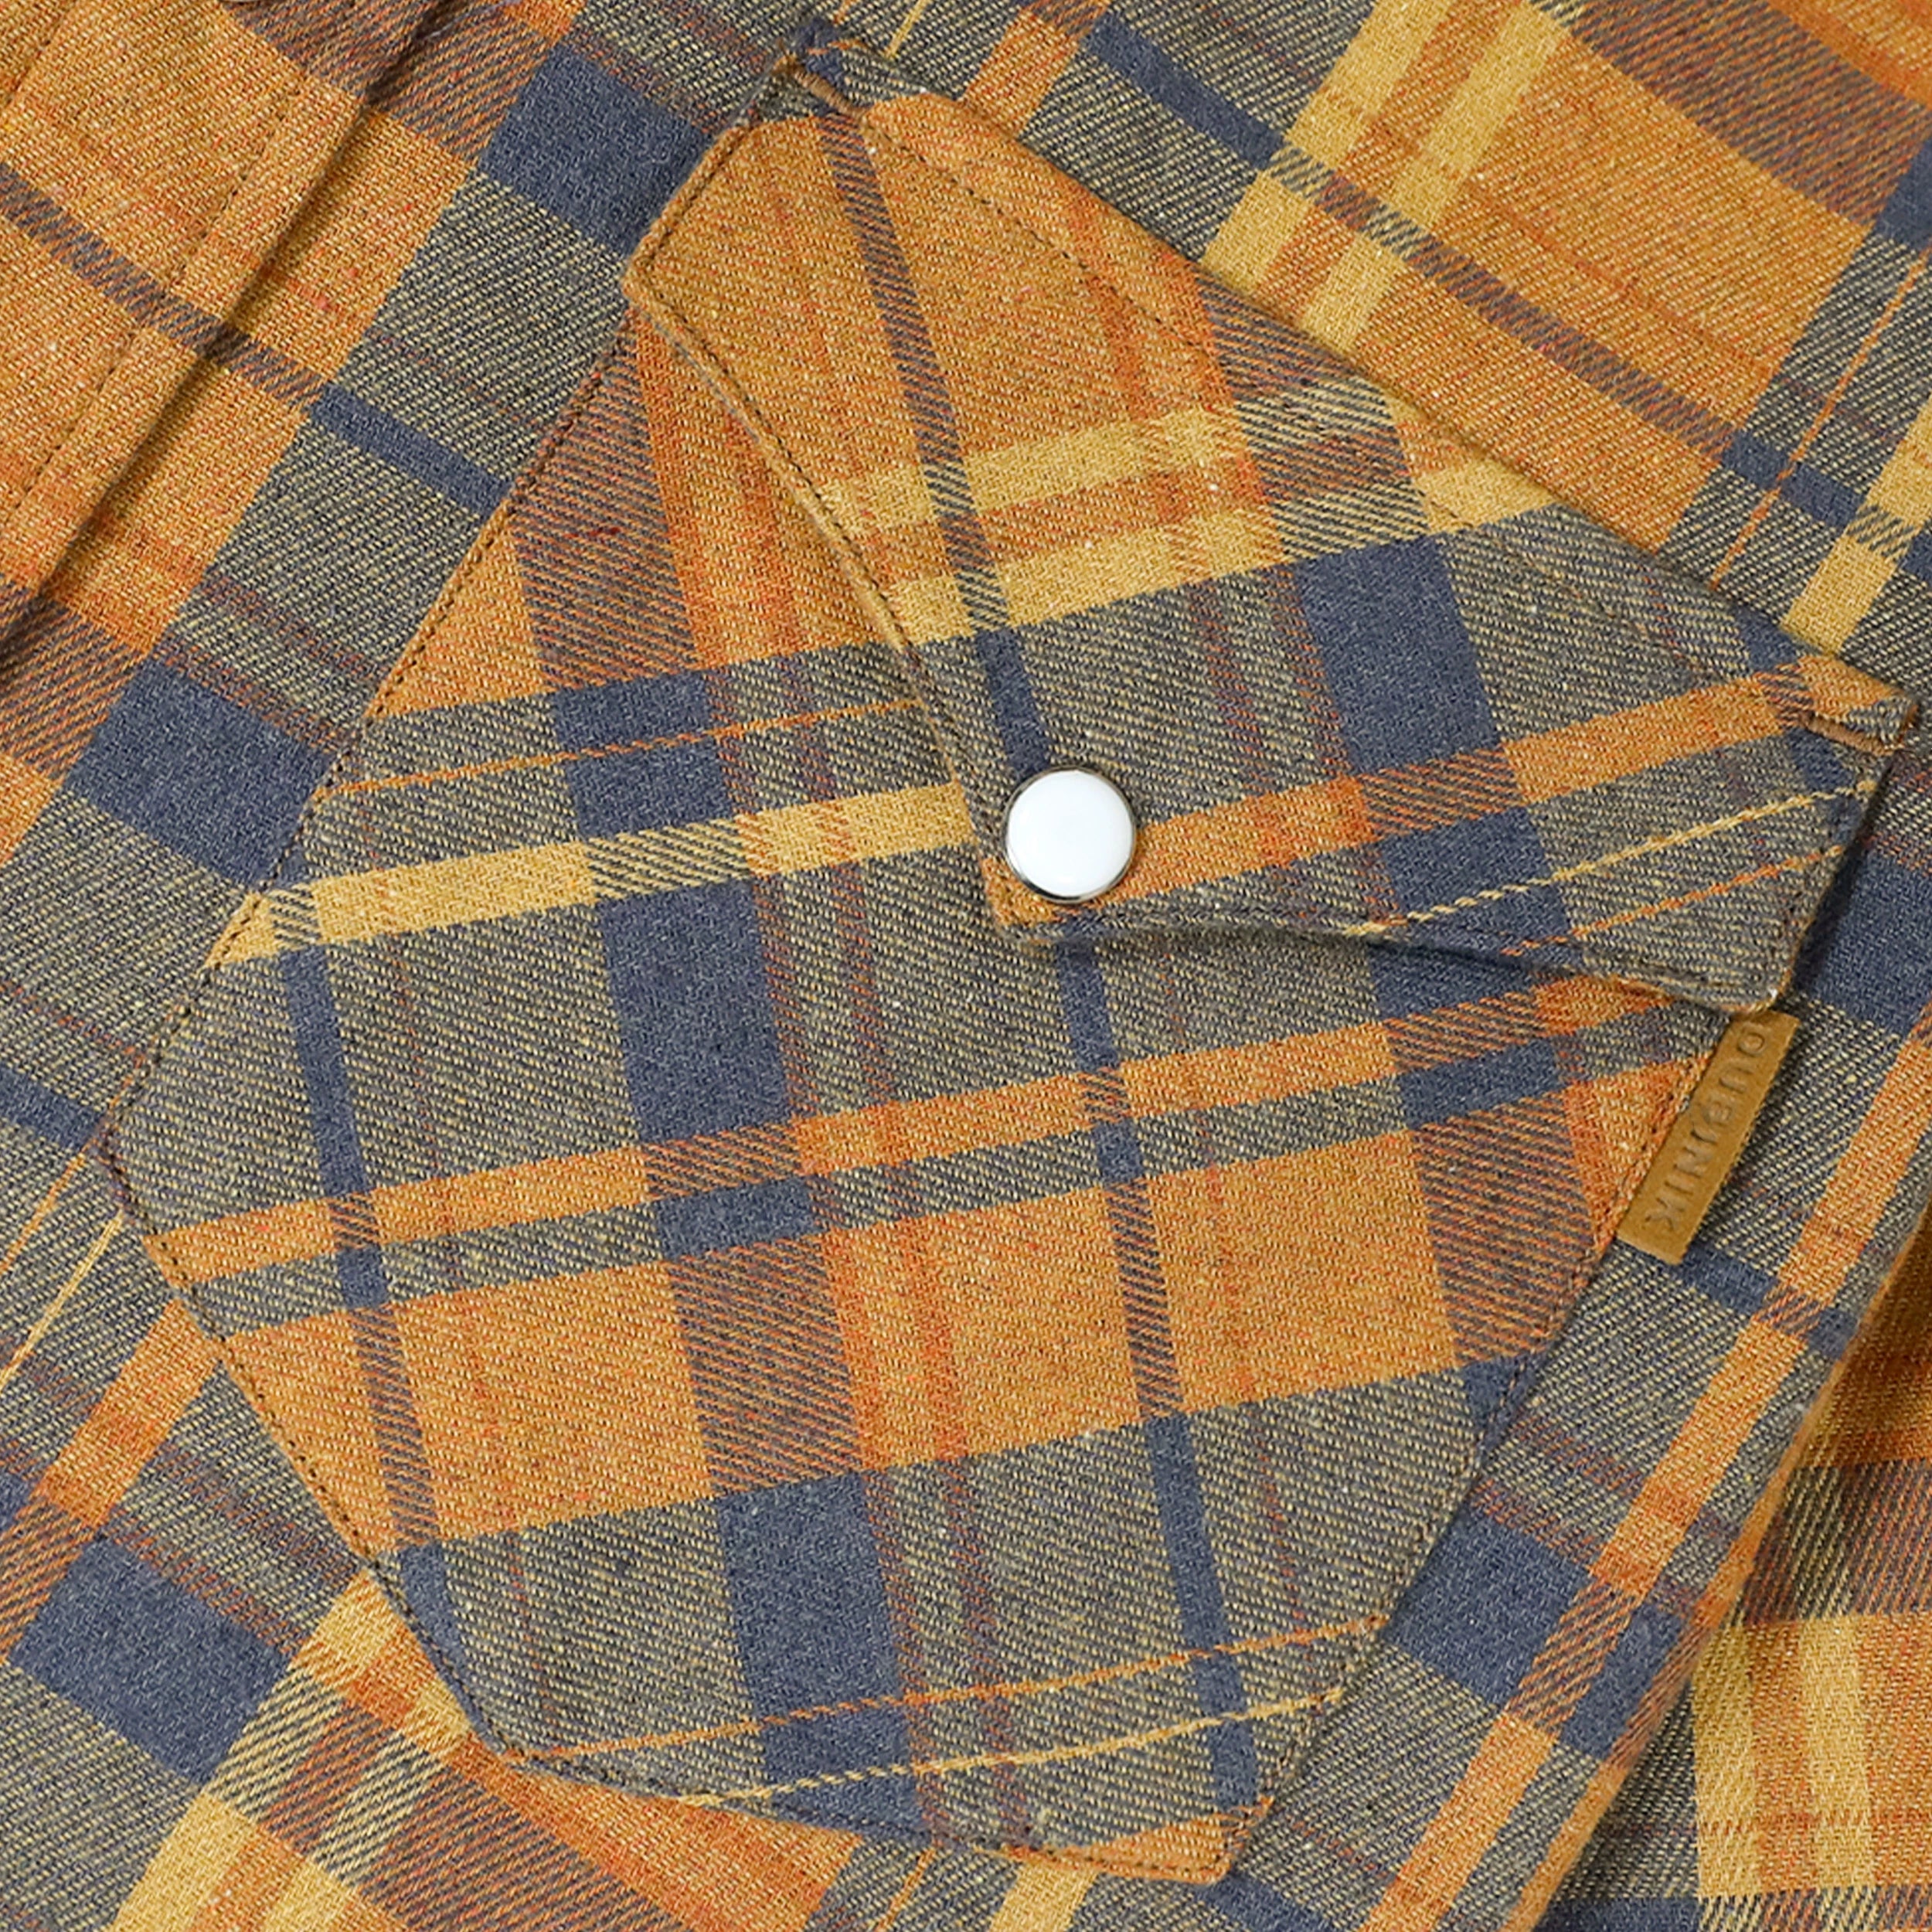 Dubinik® Flannel Shirt For Men Western Cowboy Pearl Snap Shirts For Men Long Sleeve Vintage Buttons Down Plaid Shirt #28009